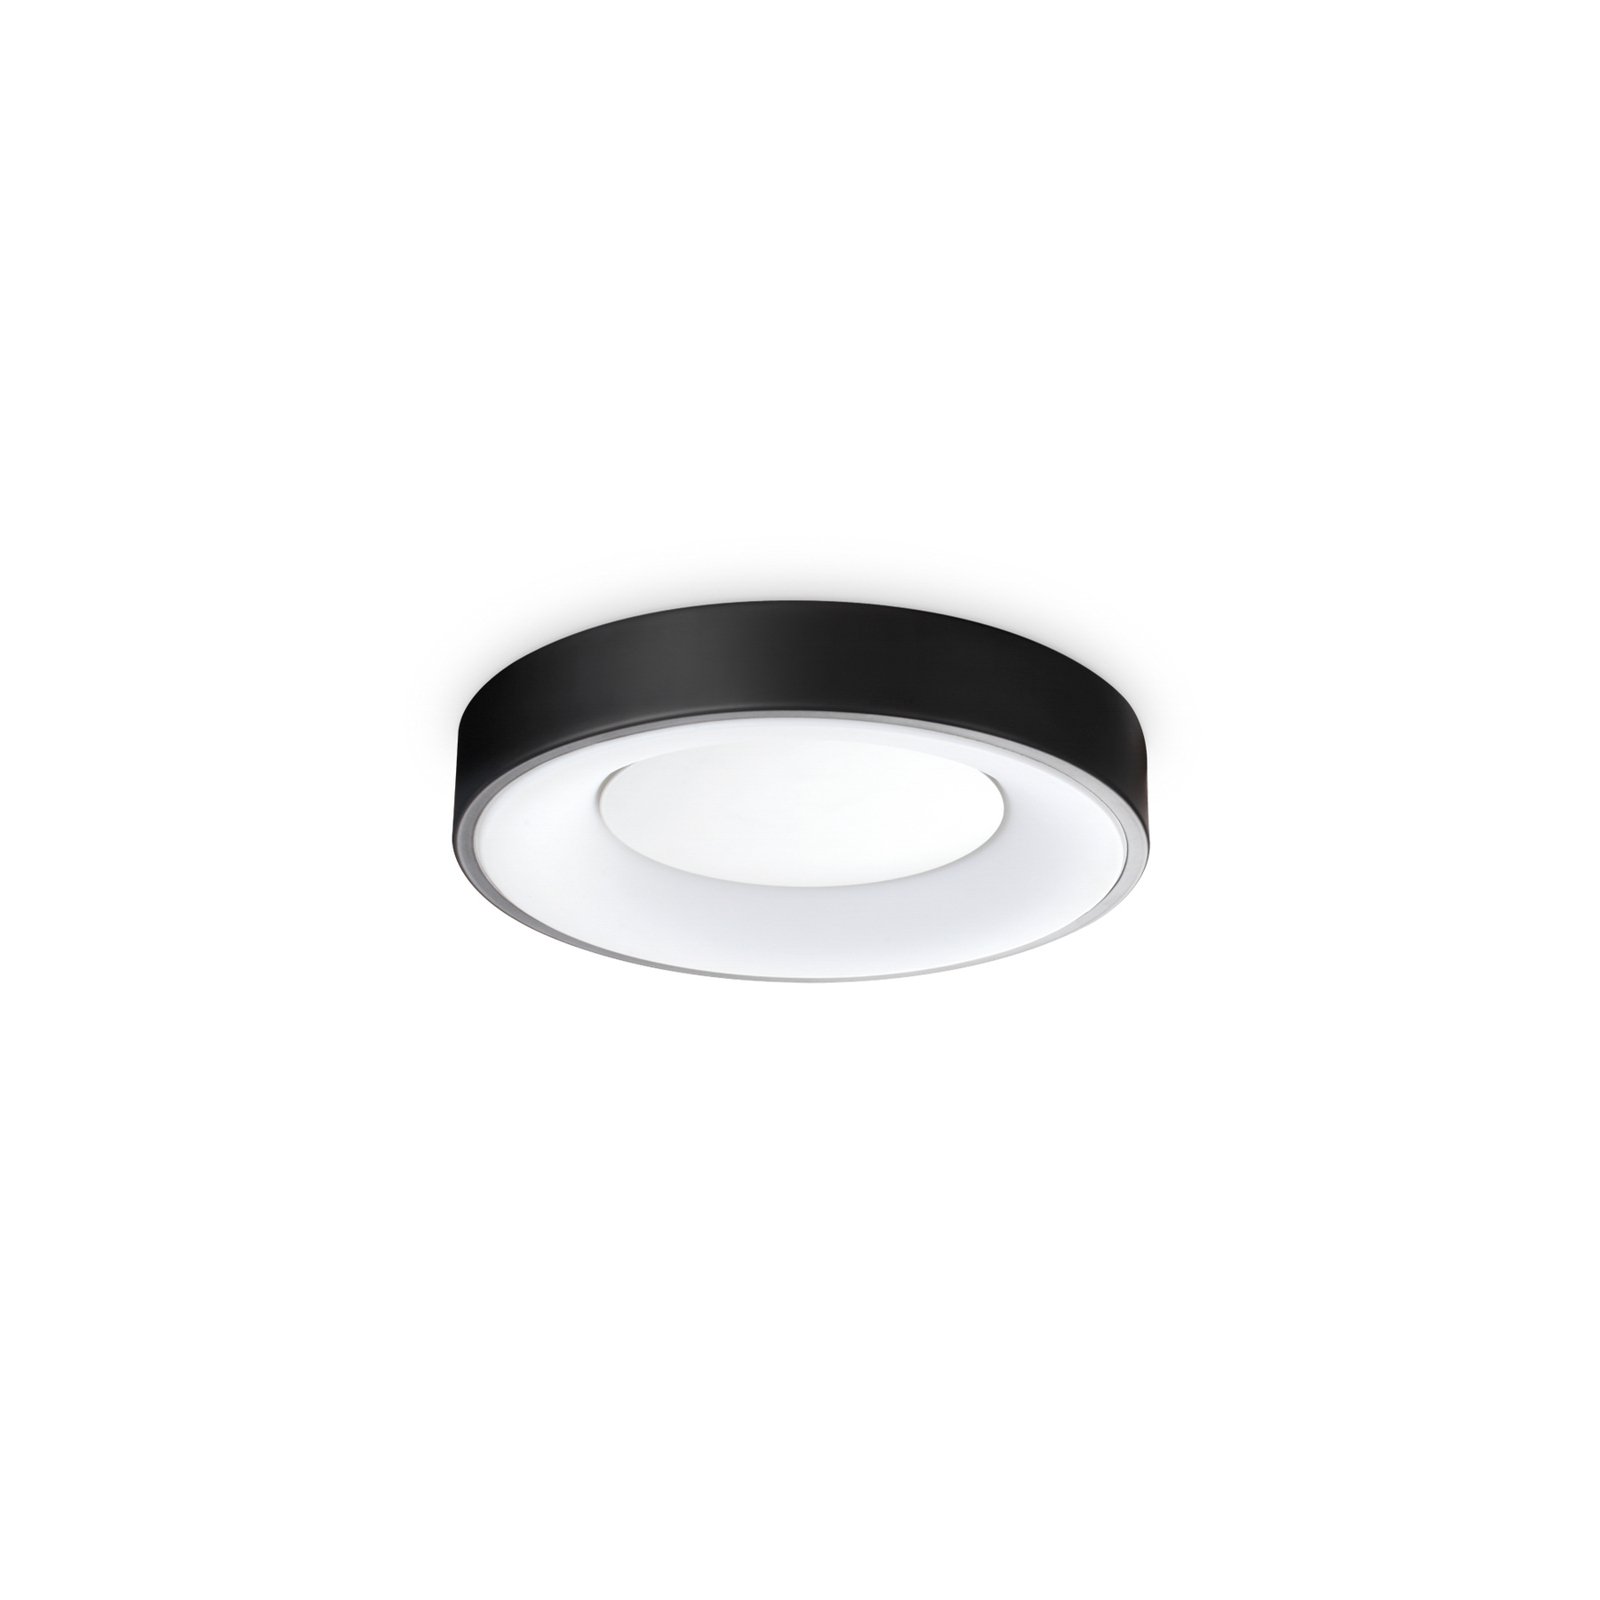 Ideal Lux LED stropné svietidlo Planet, čierne, Ø 30 cm, kov